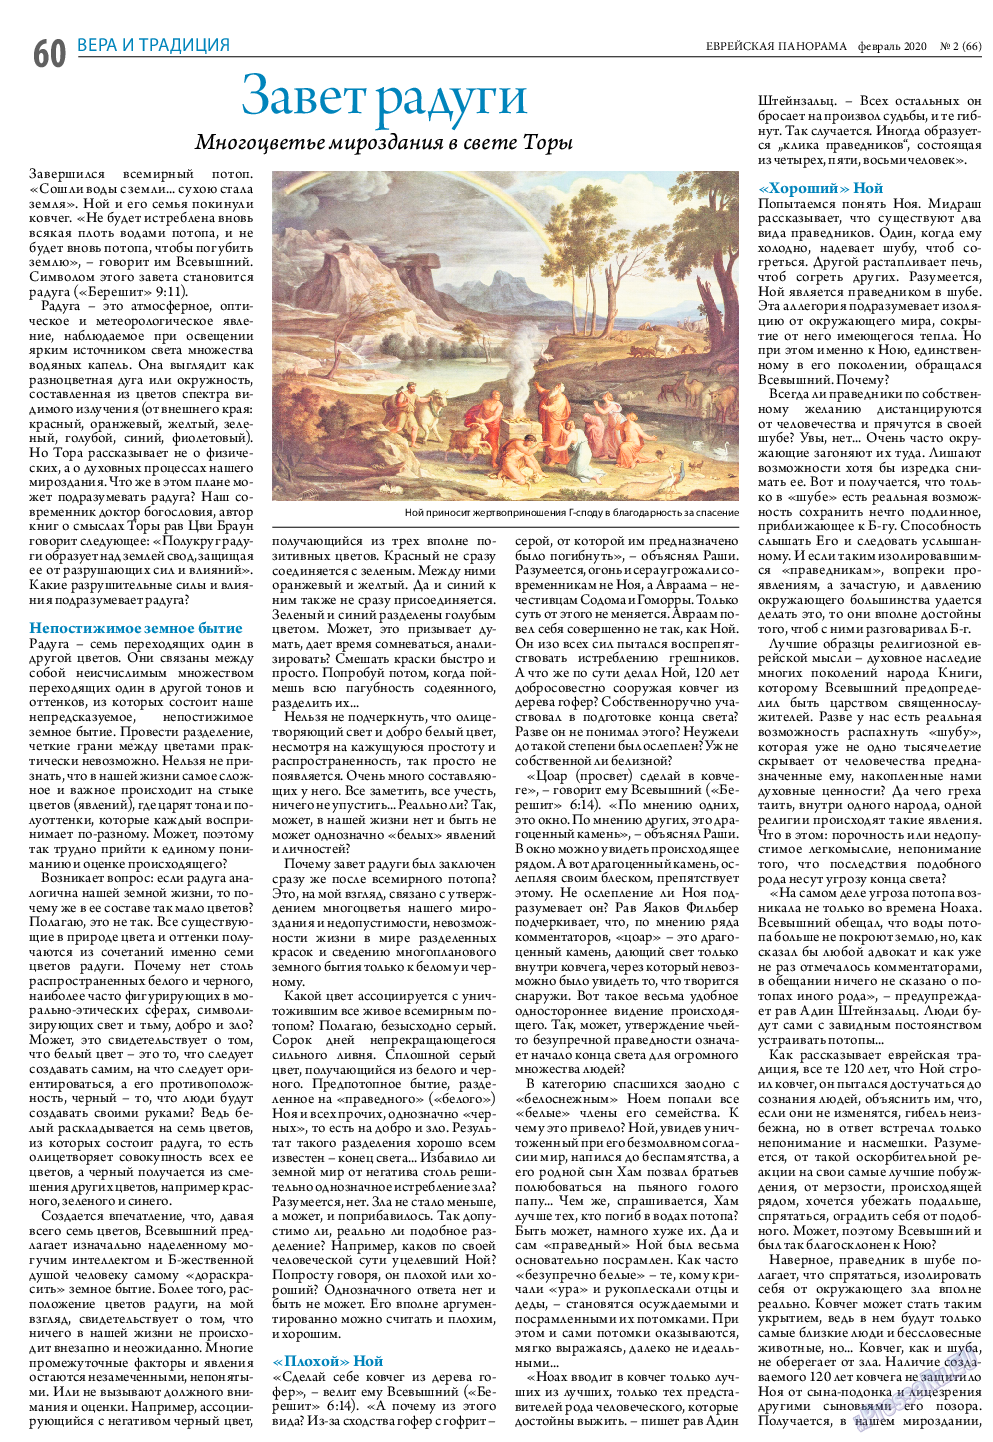 Еврейская панорама, газета. 2020 №2 стр.60